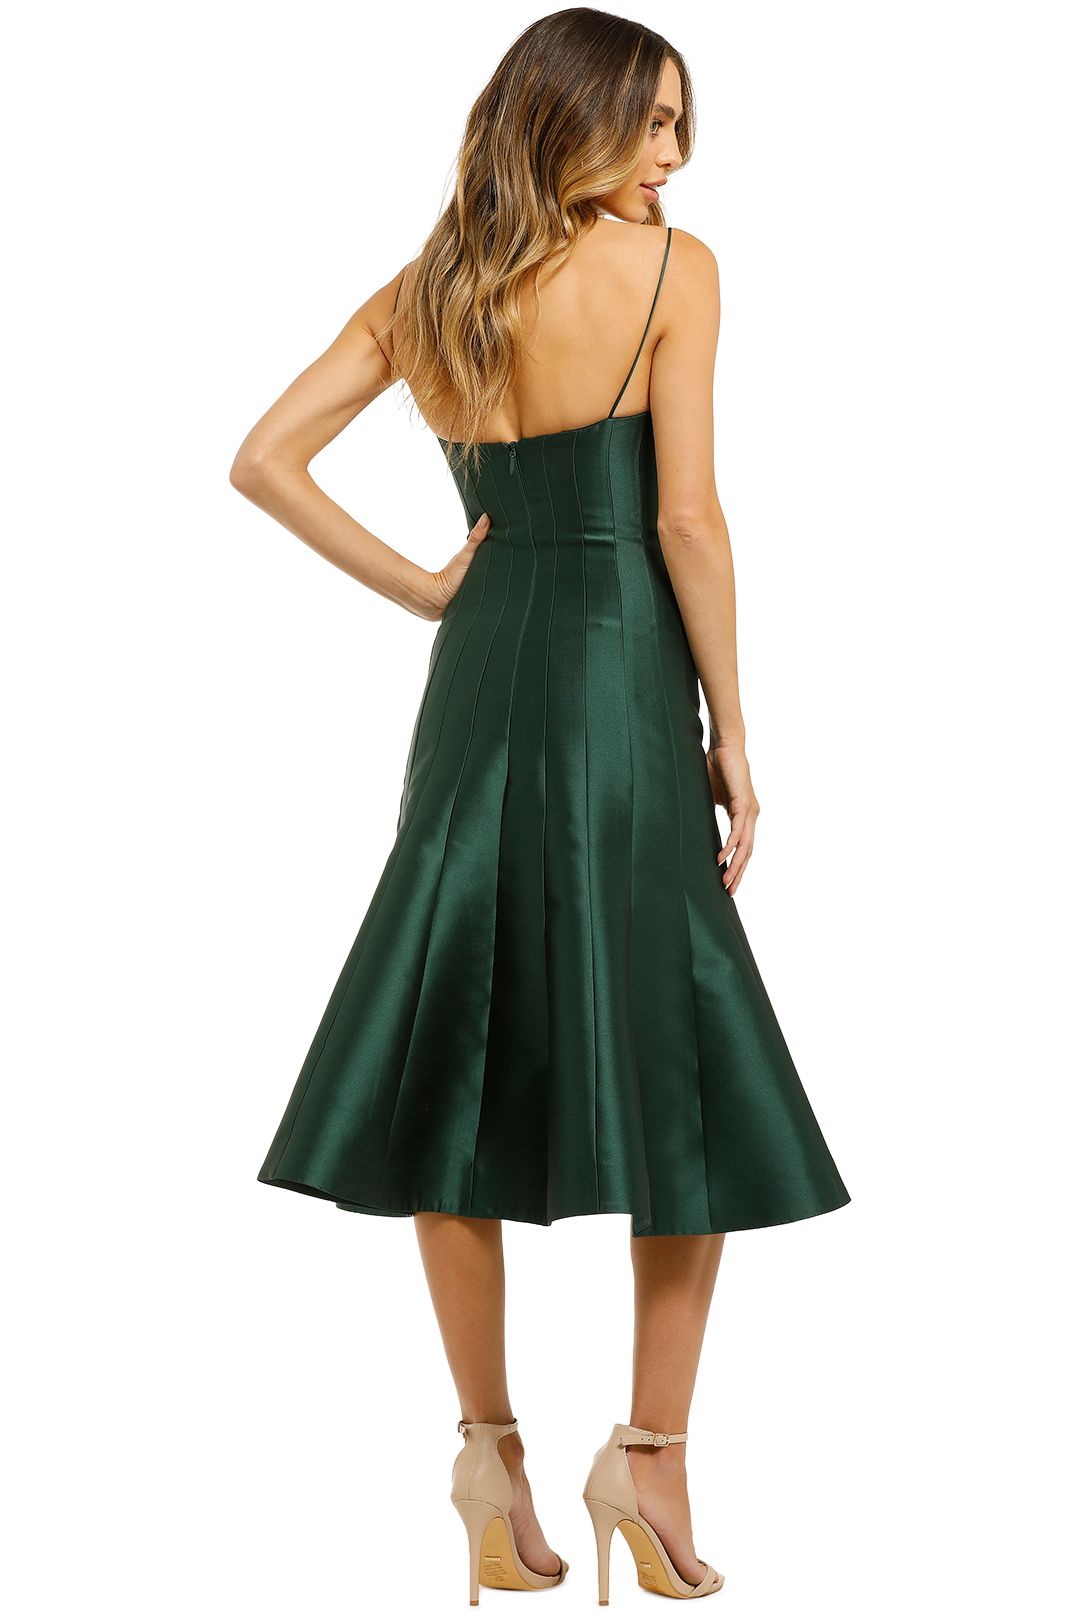 Thurley-Caspian-Dress-Bottle-Green-Back